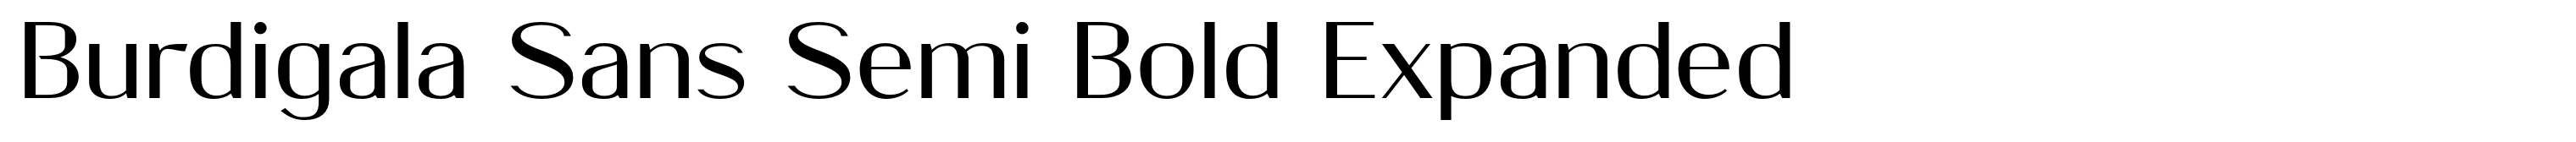 Burdigala Sans Semi Bold Expanded